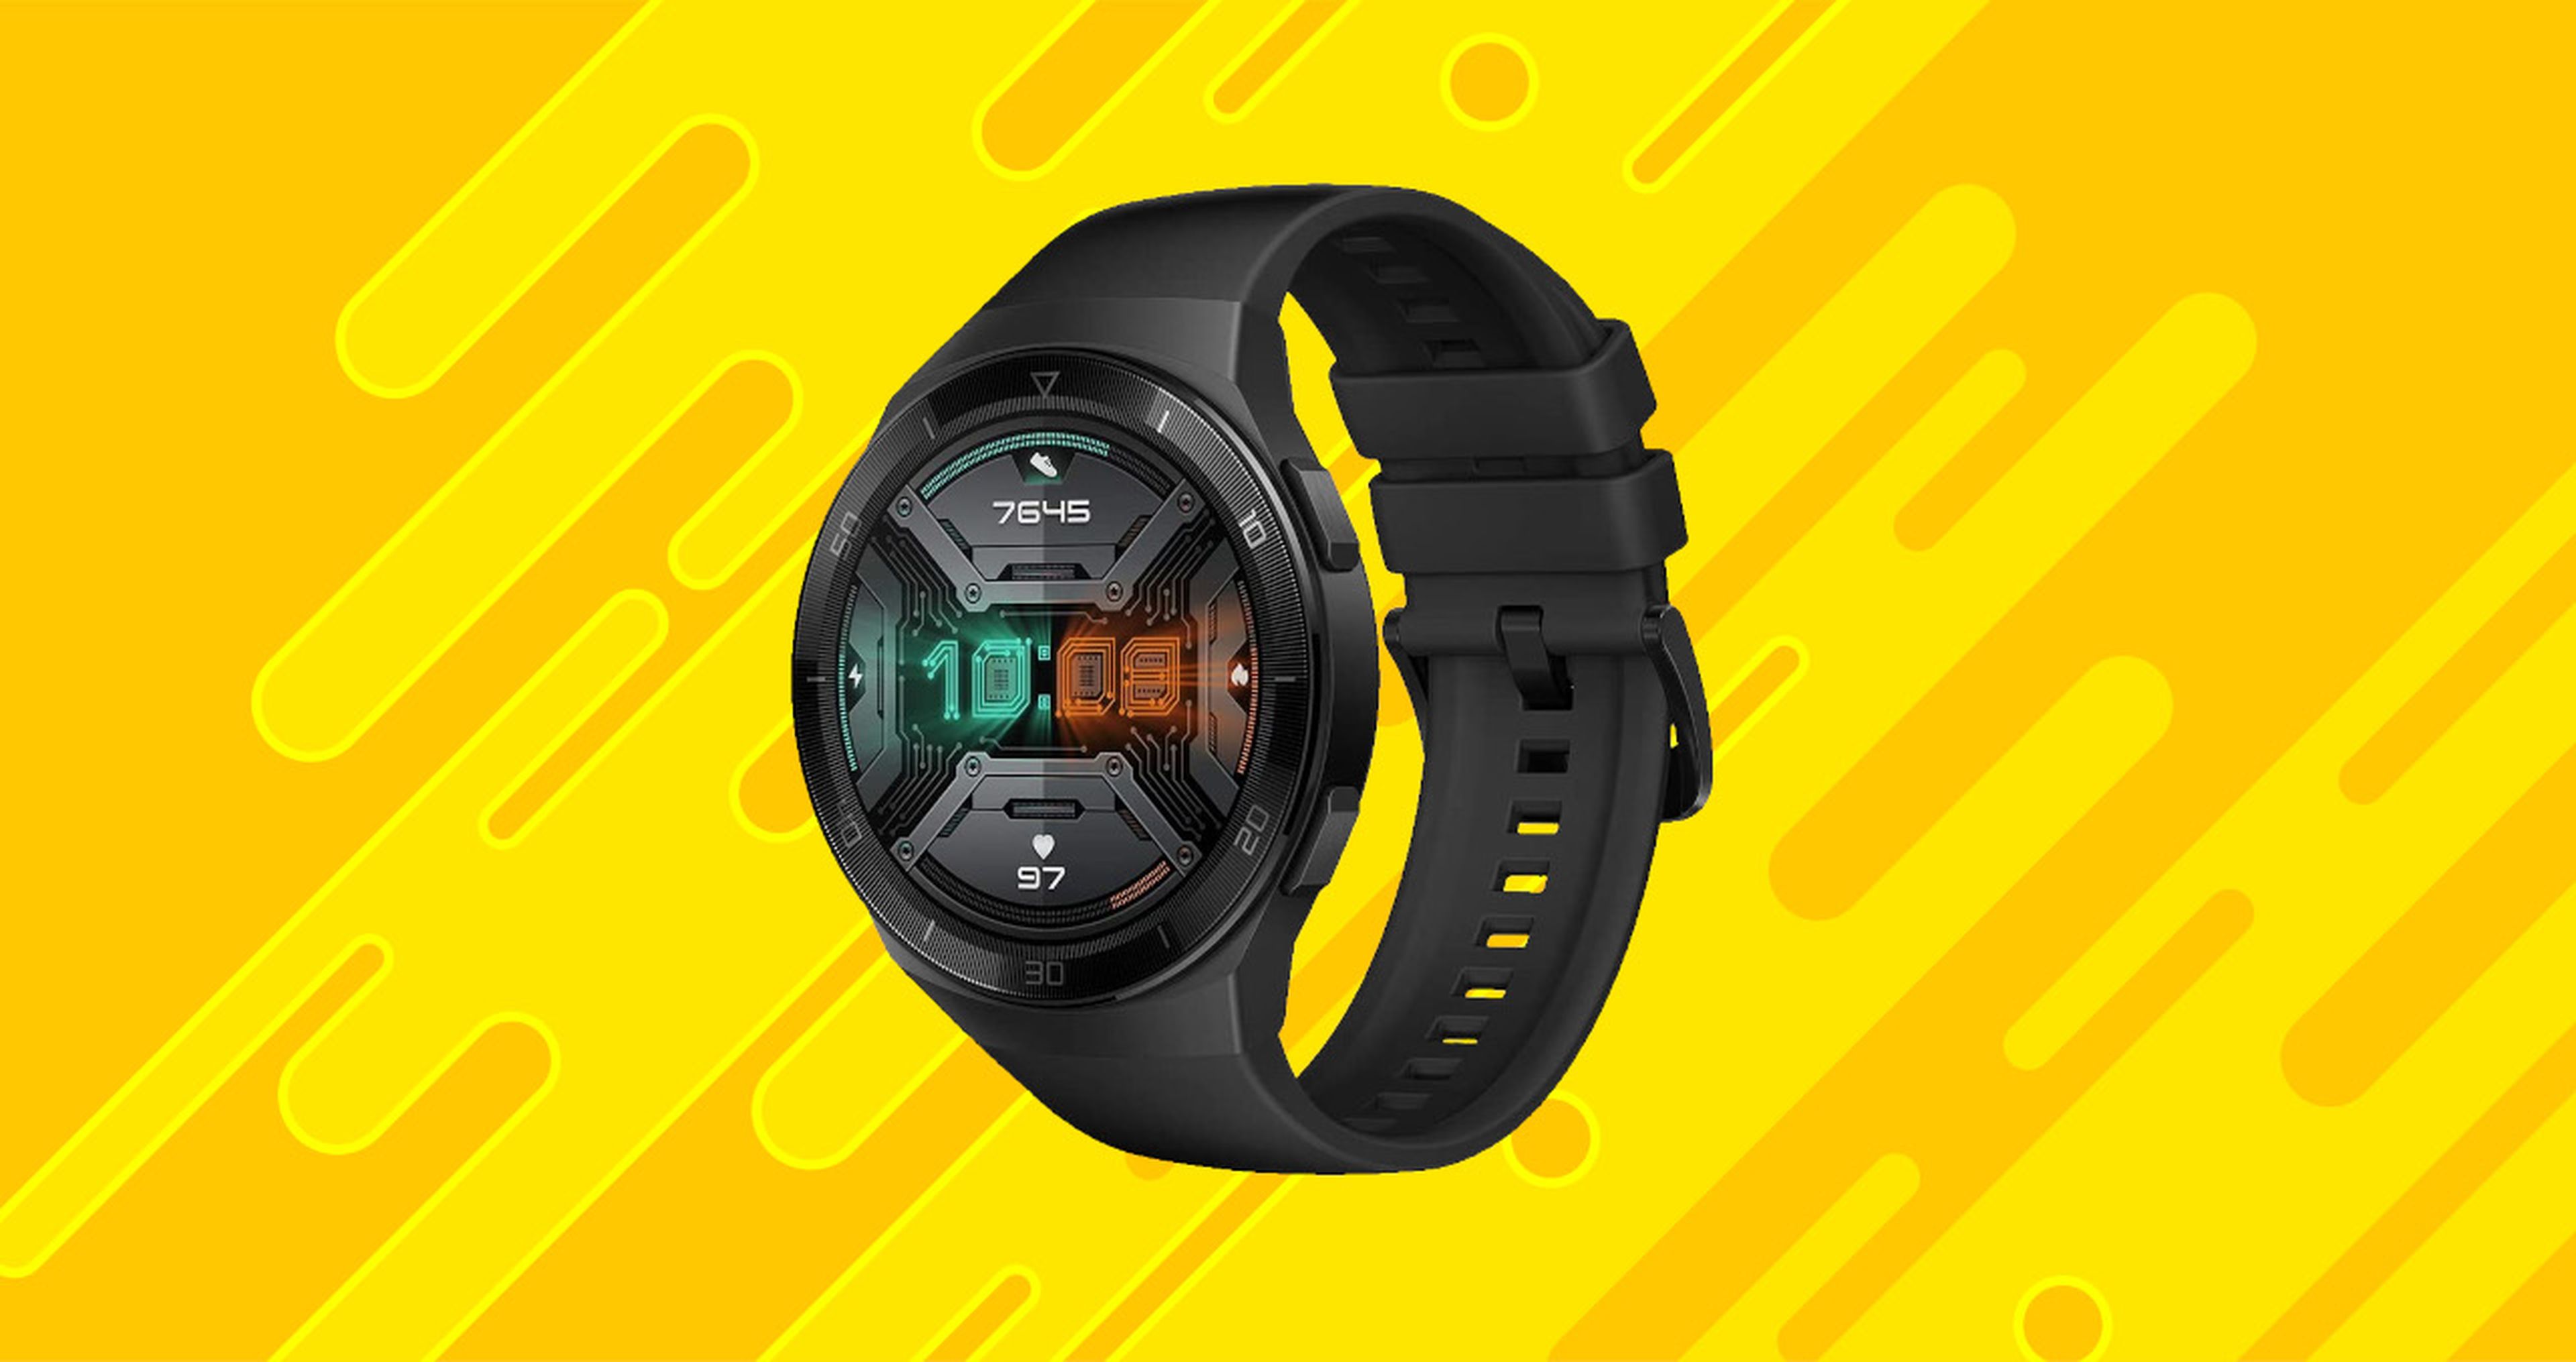 Si buscas un deportivo barato, este smartwatch de Huawei cuesta solo 79 euros Hoy